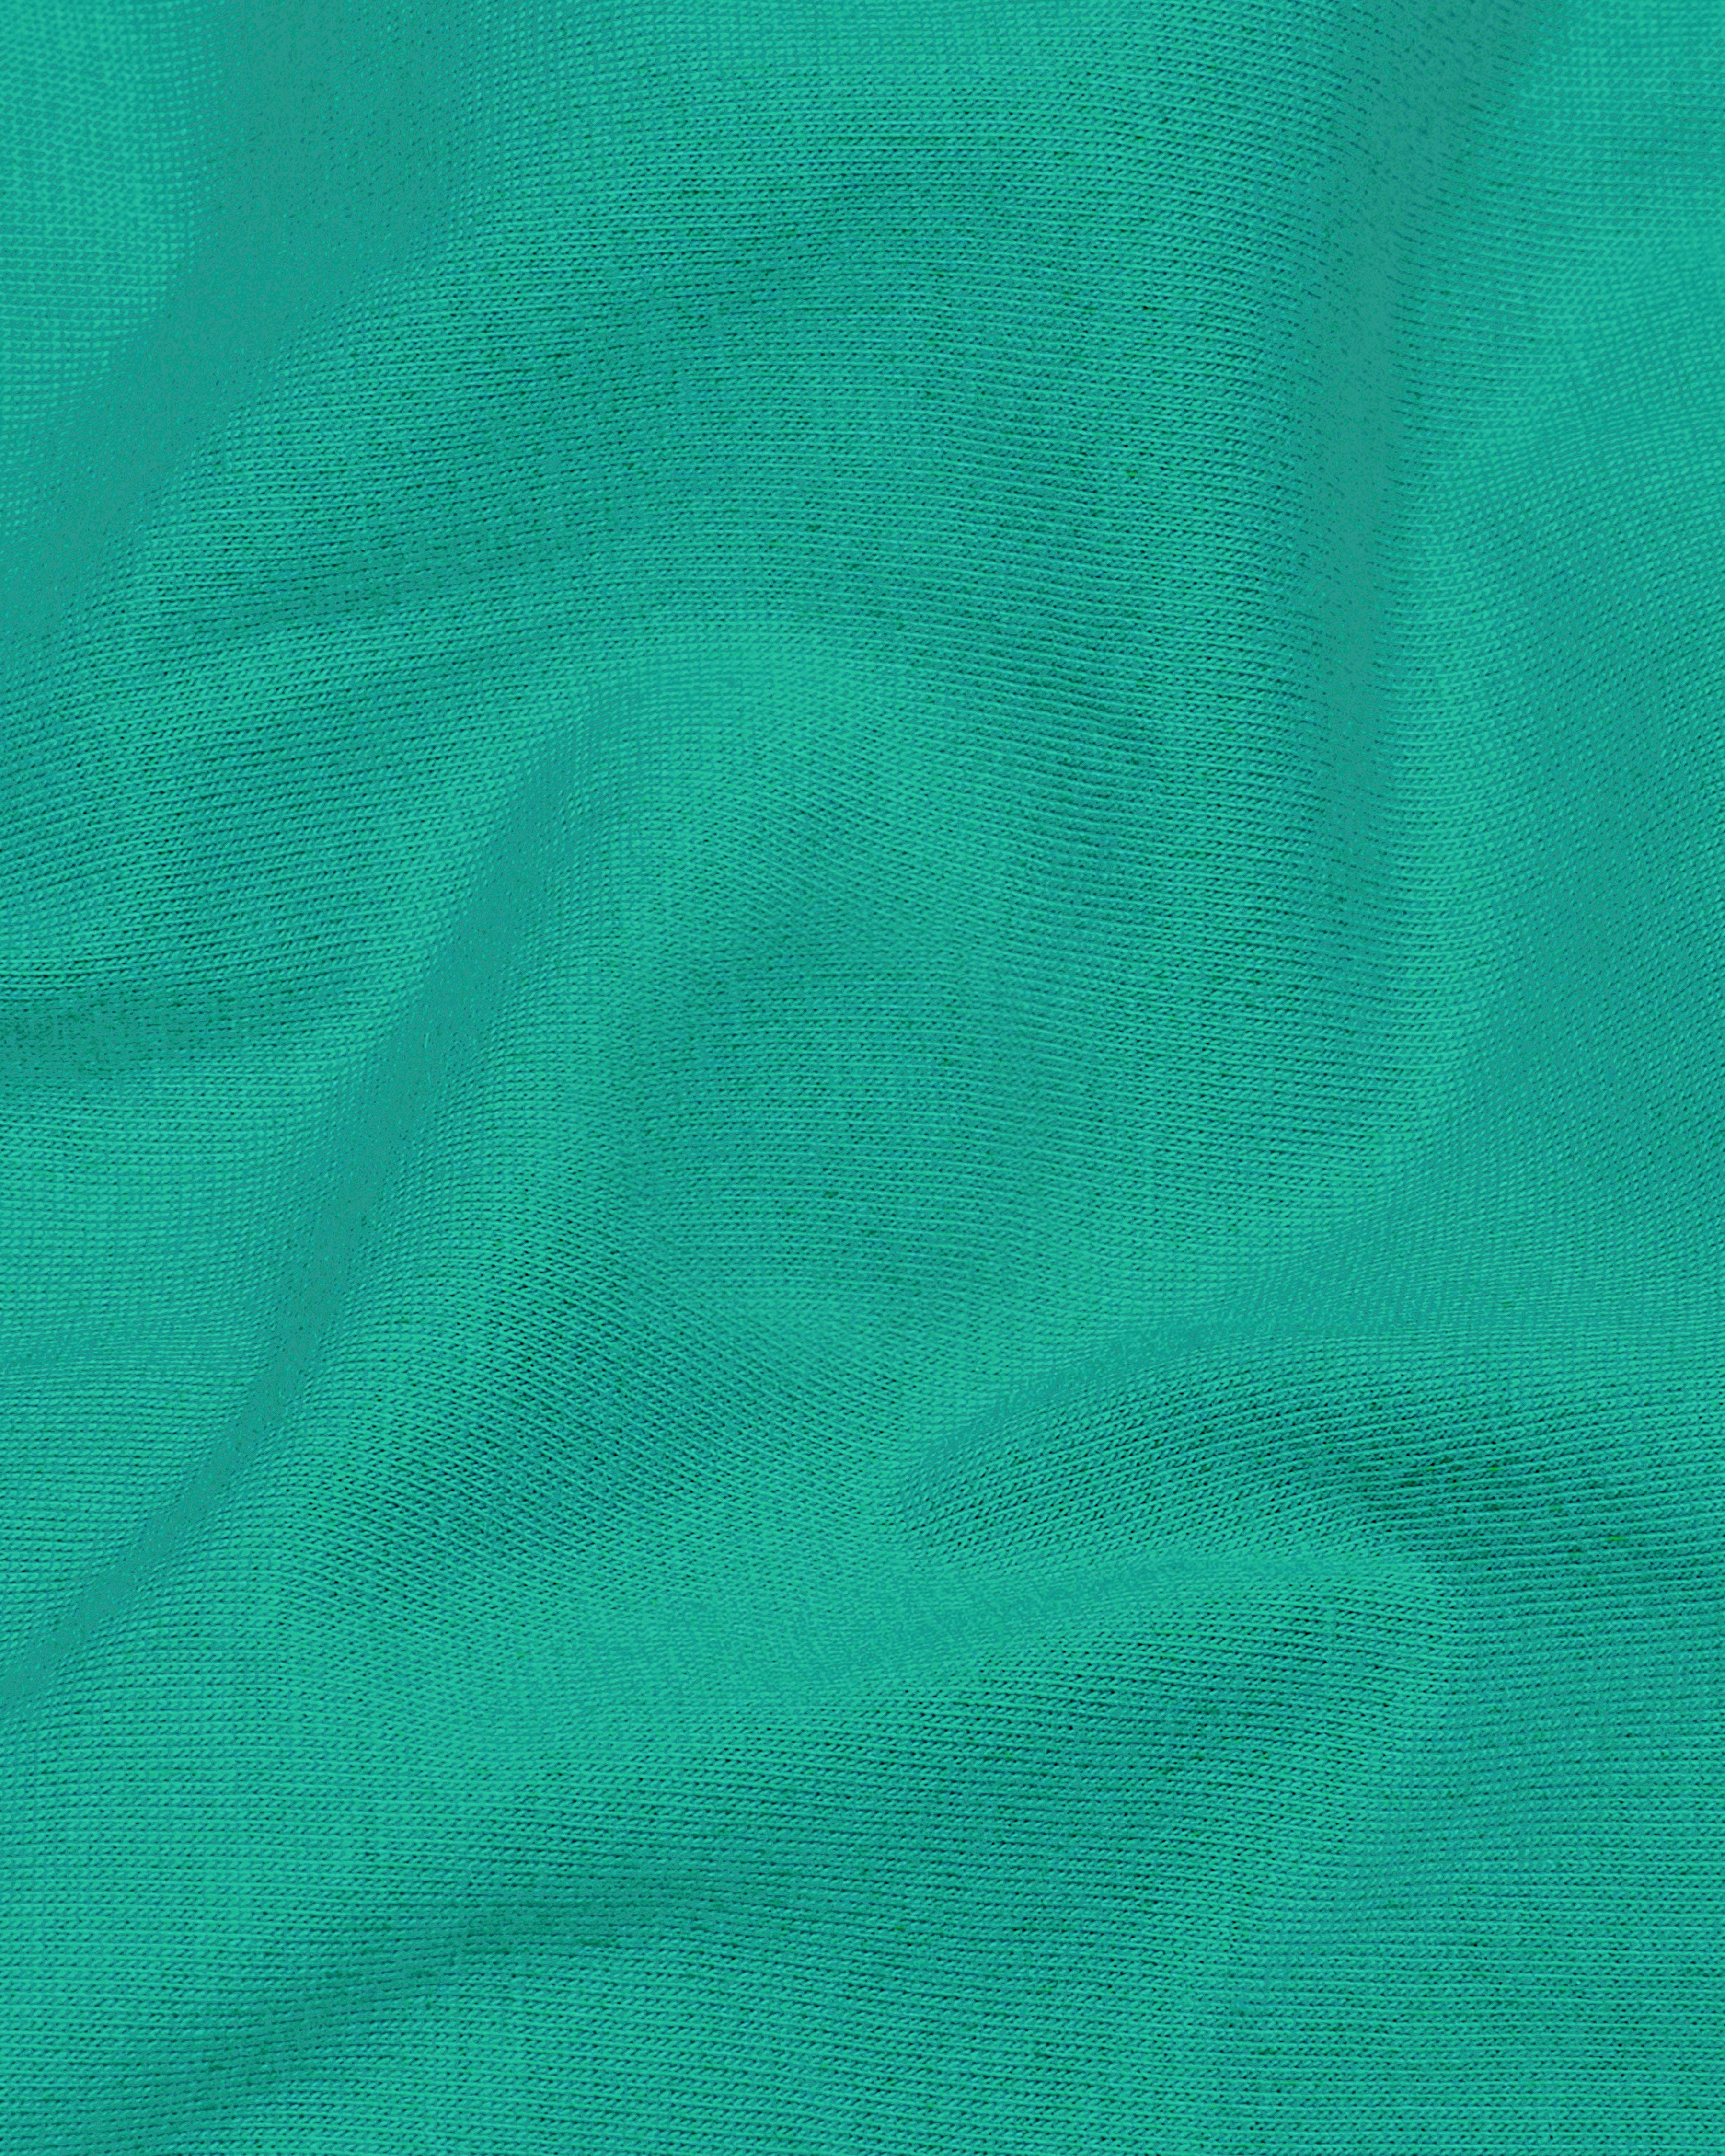 Jade Green Digital Printed Organic Cotton T-shirt TS074-W01-S, TS074-W01-M, TS074-W01-L, TS074-W01-XL, TS074-W01-XXL